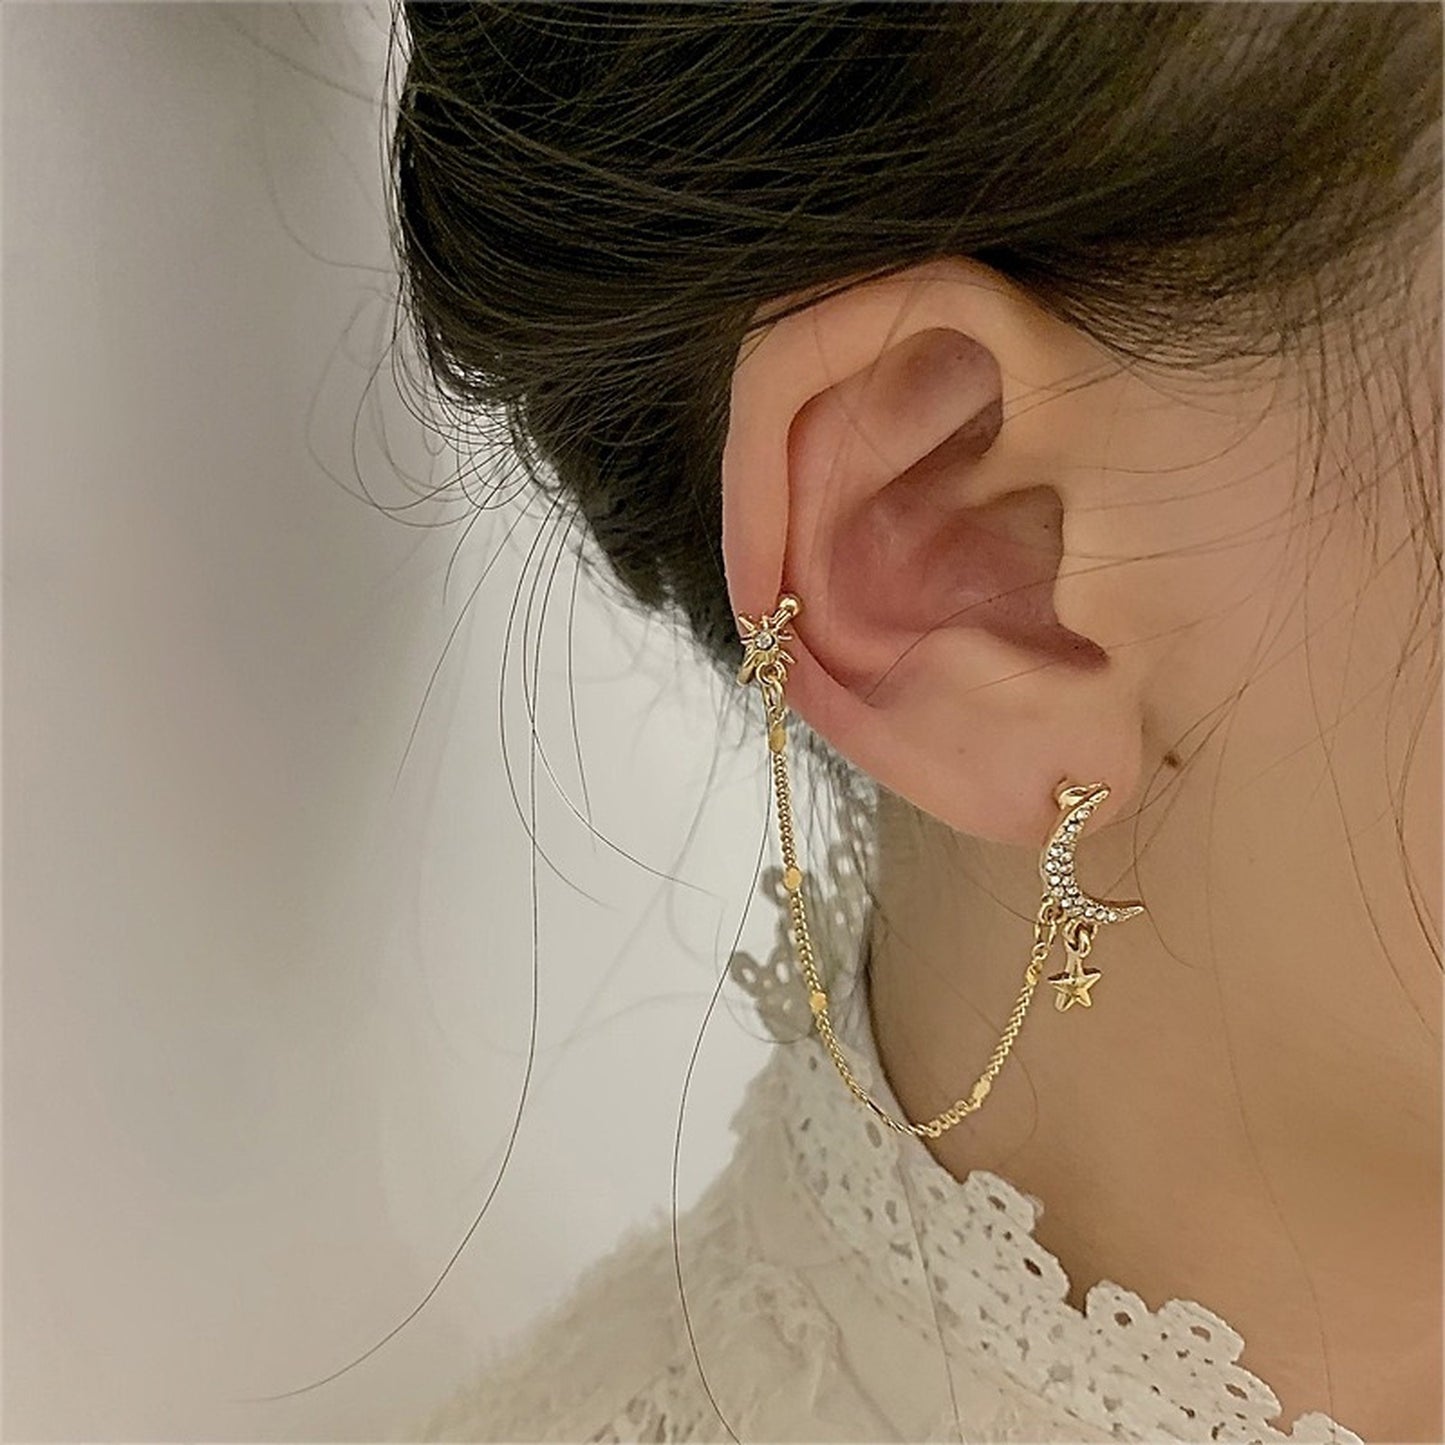 Golden star ear cuff, Gold celestial cuff earrings, North star ear wrap, Crescent moon ear climber, Linked chain dangle ear cuff, Minimalist